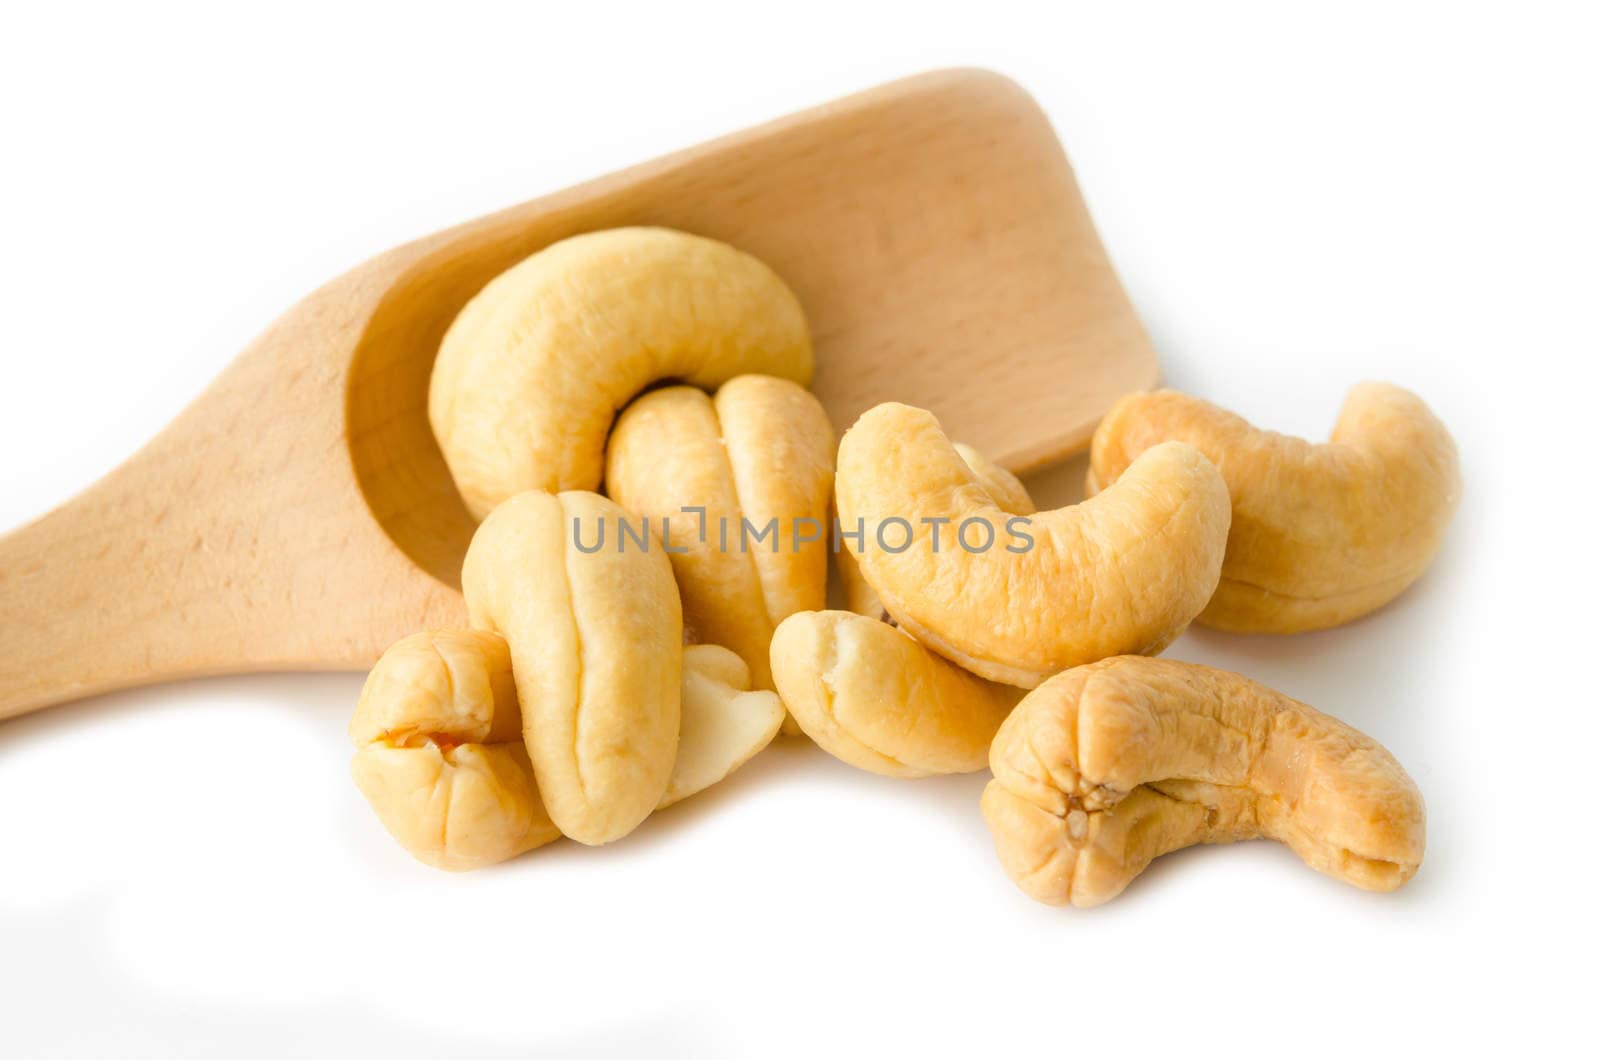 Roasted cashew nuts by Gamjai